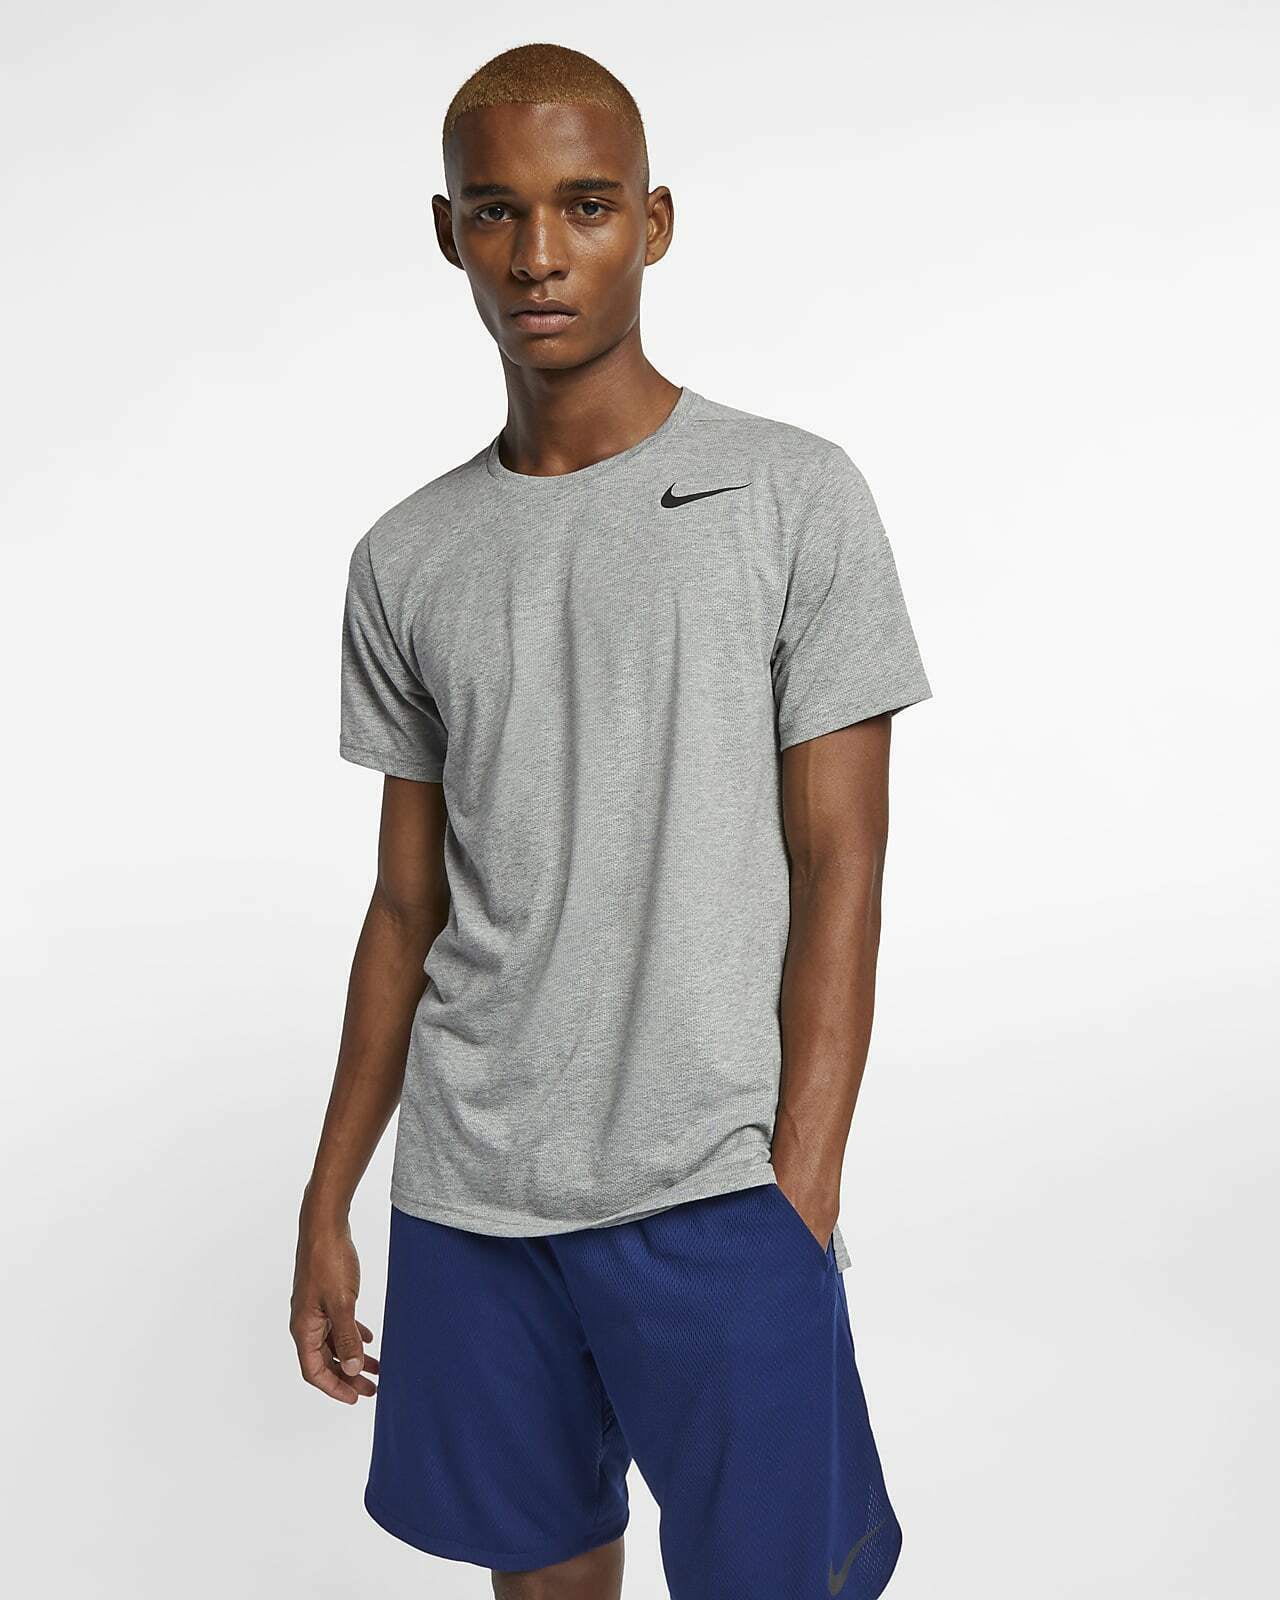 Nike Breathe (Grey ) Men's Running Training T Shirt Size M -